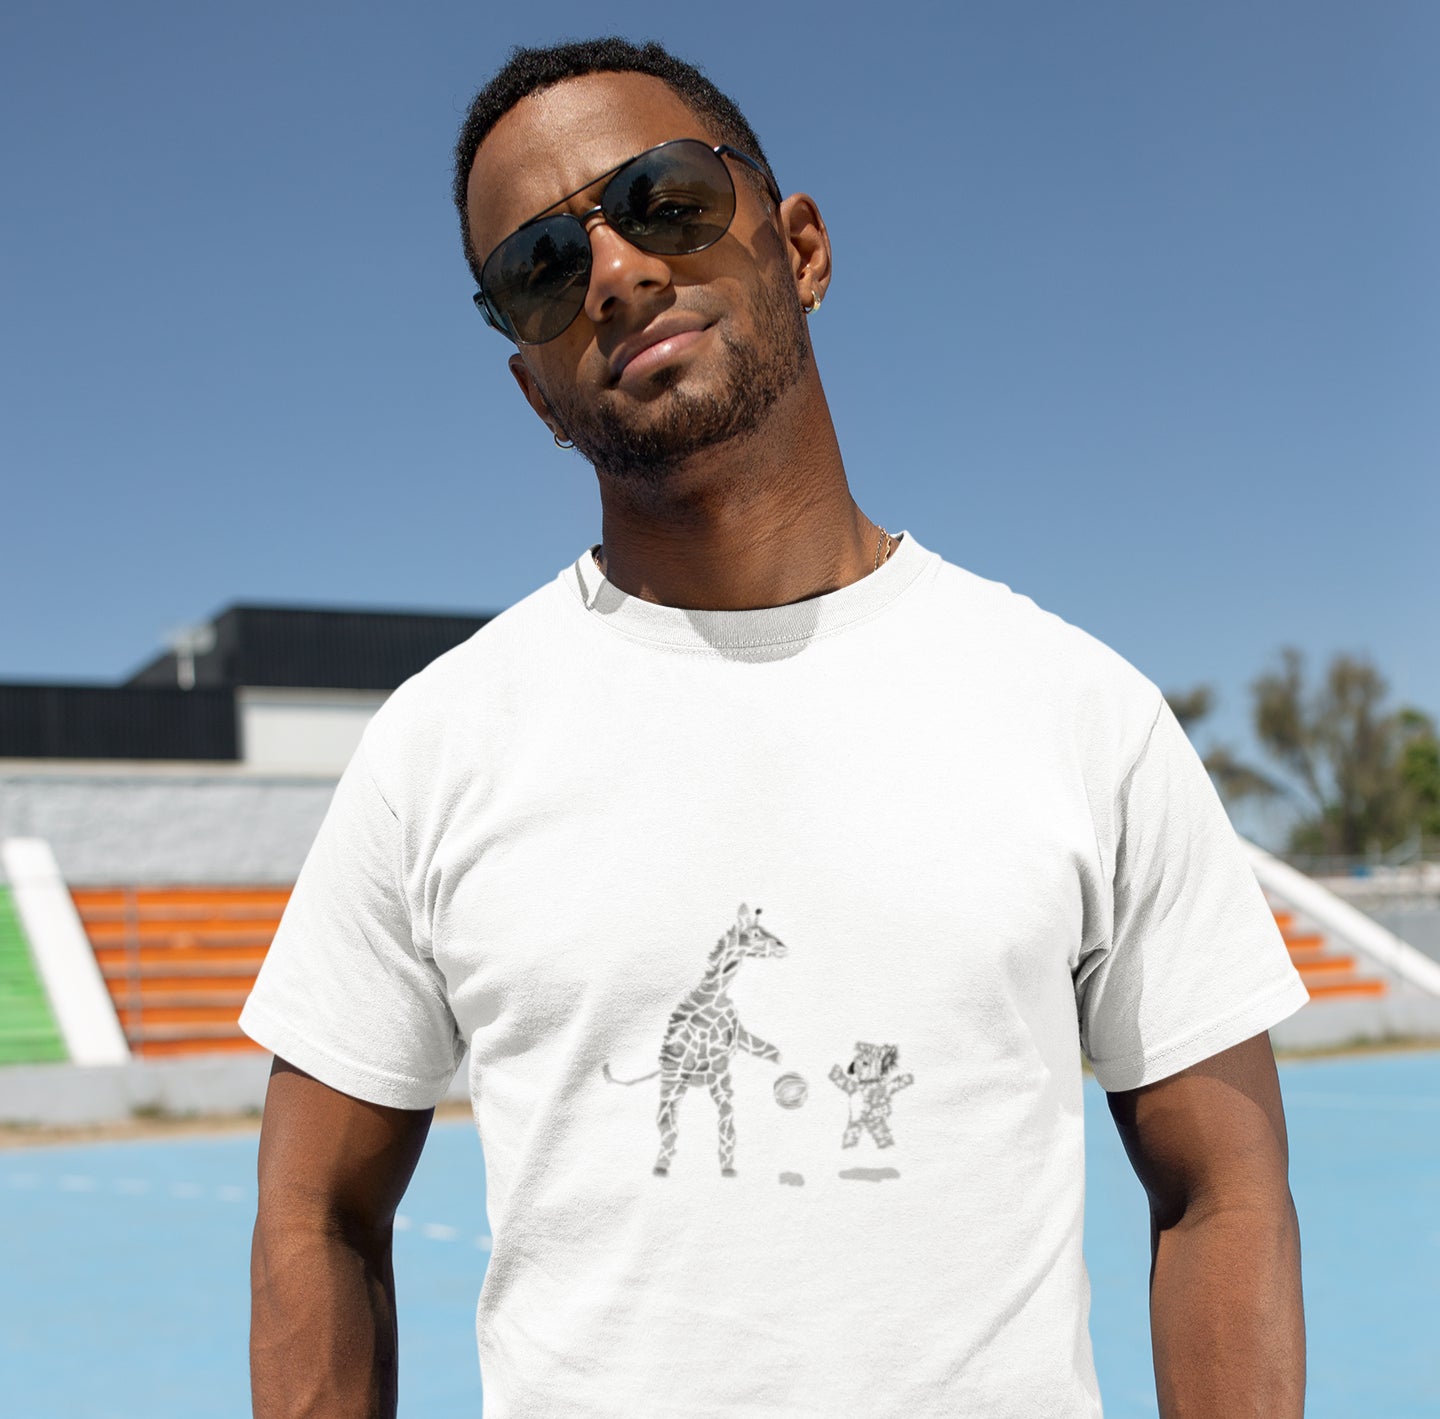 Koala Giraffe Basketball | Organic Cotton T Shirt worn by a man by a pool